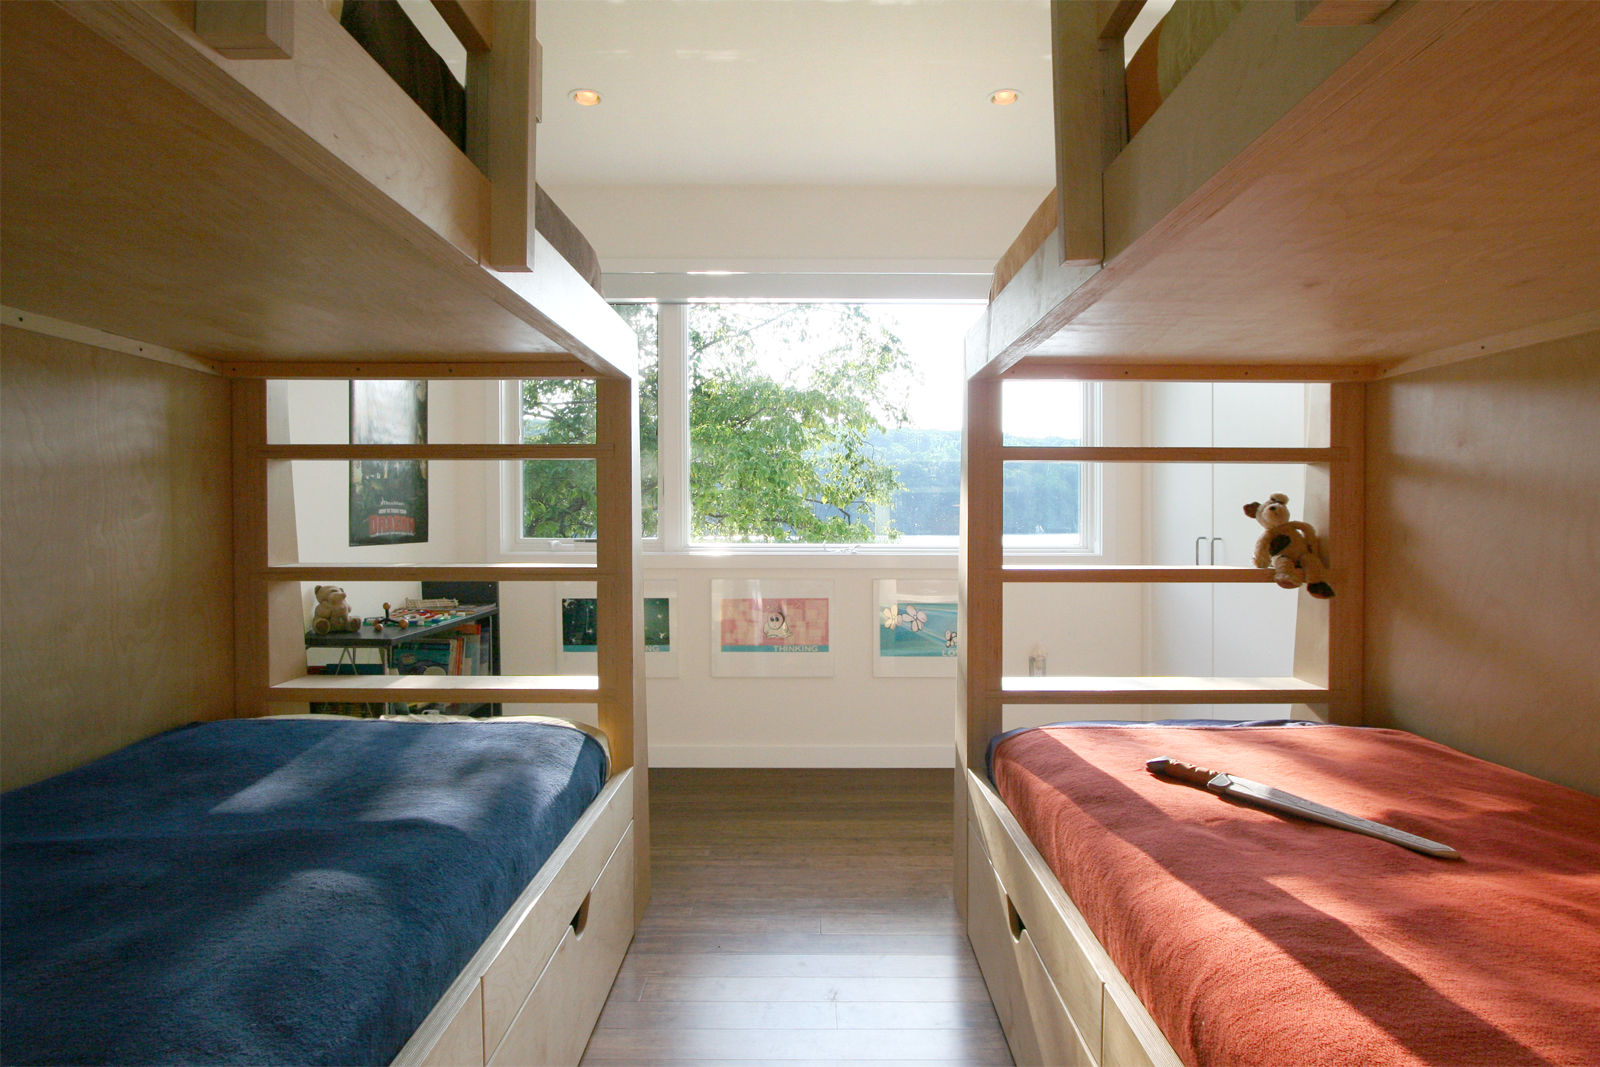 16-re4a-resolution-4-architecture-modern-modular-home-prefab-house-lake-iosco-interior-kids-bedroom-bunk-beds-01.jpg